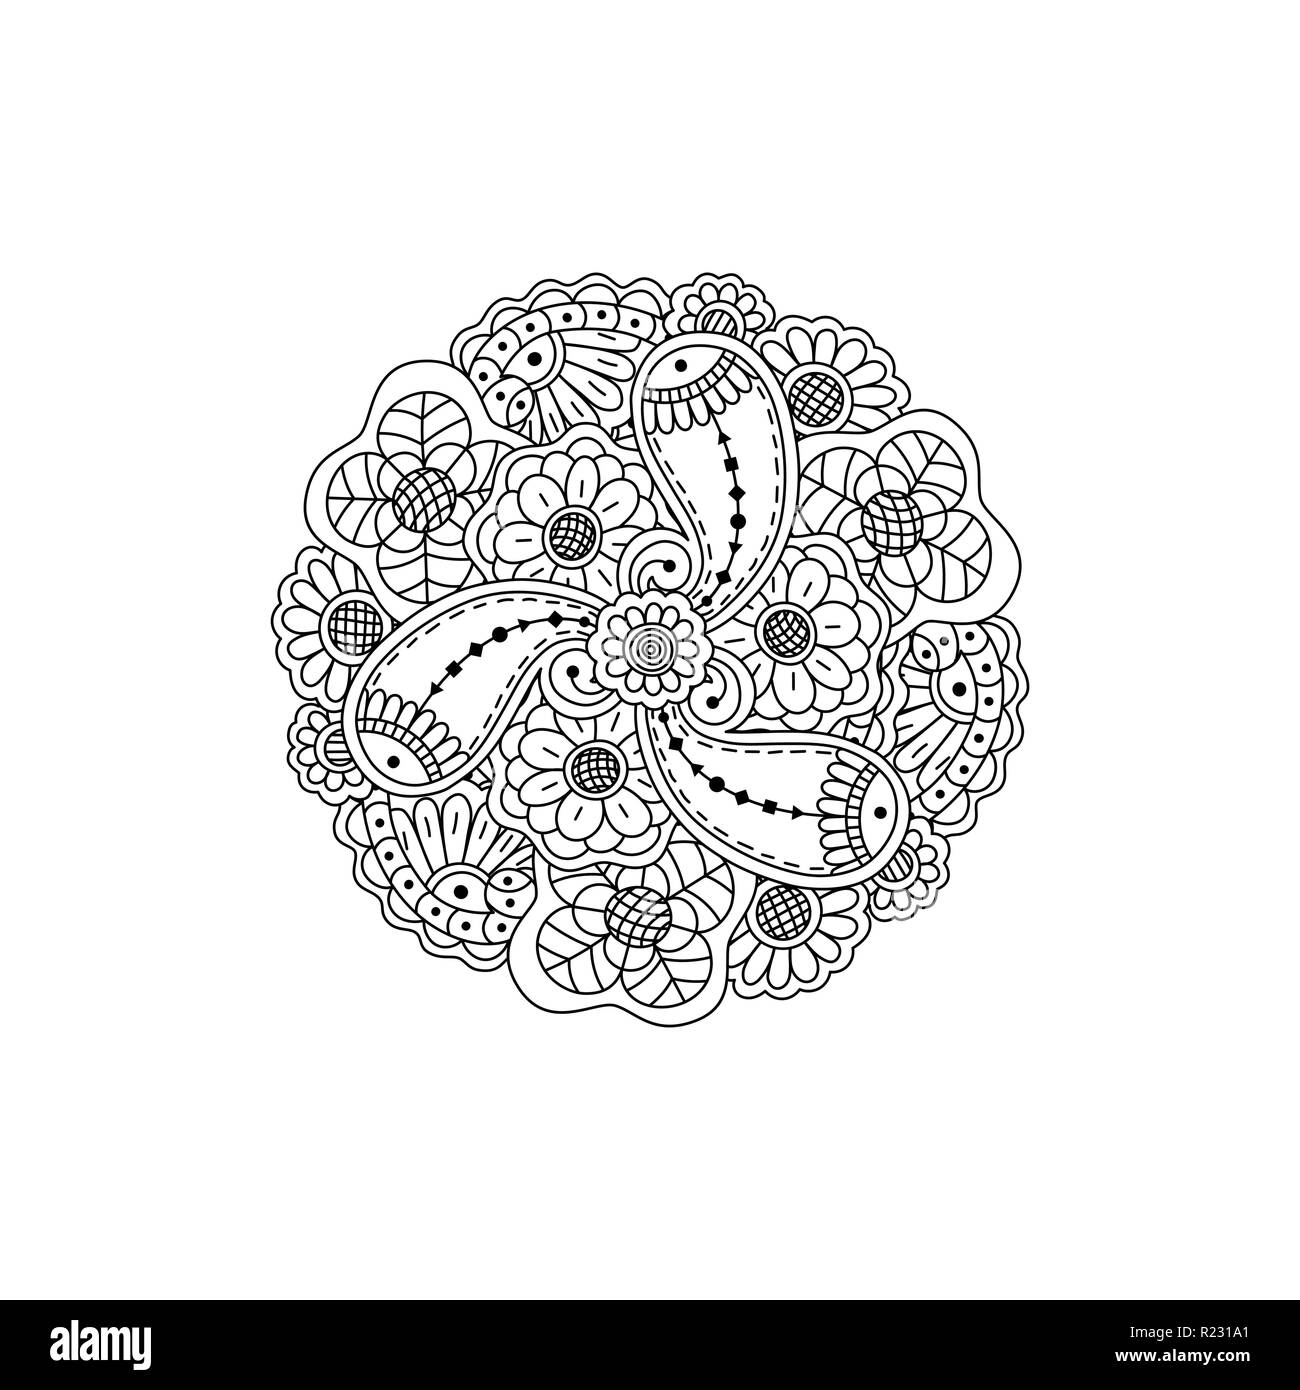 Vektor dekorativem Blumenmuster Mandala, gemusterten Design Element. Malbuch Seite Anti Stress für Erwachsene. Stock Vektor